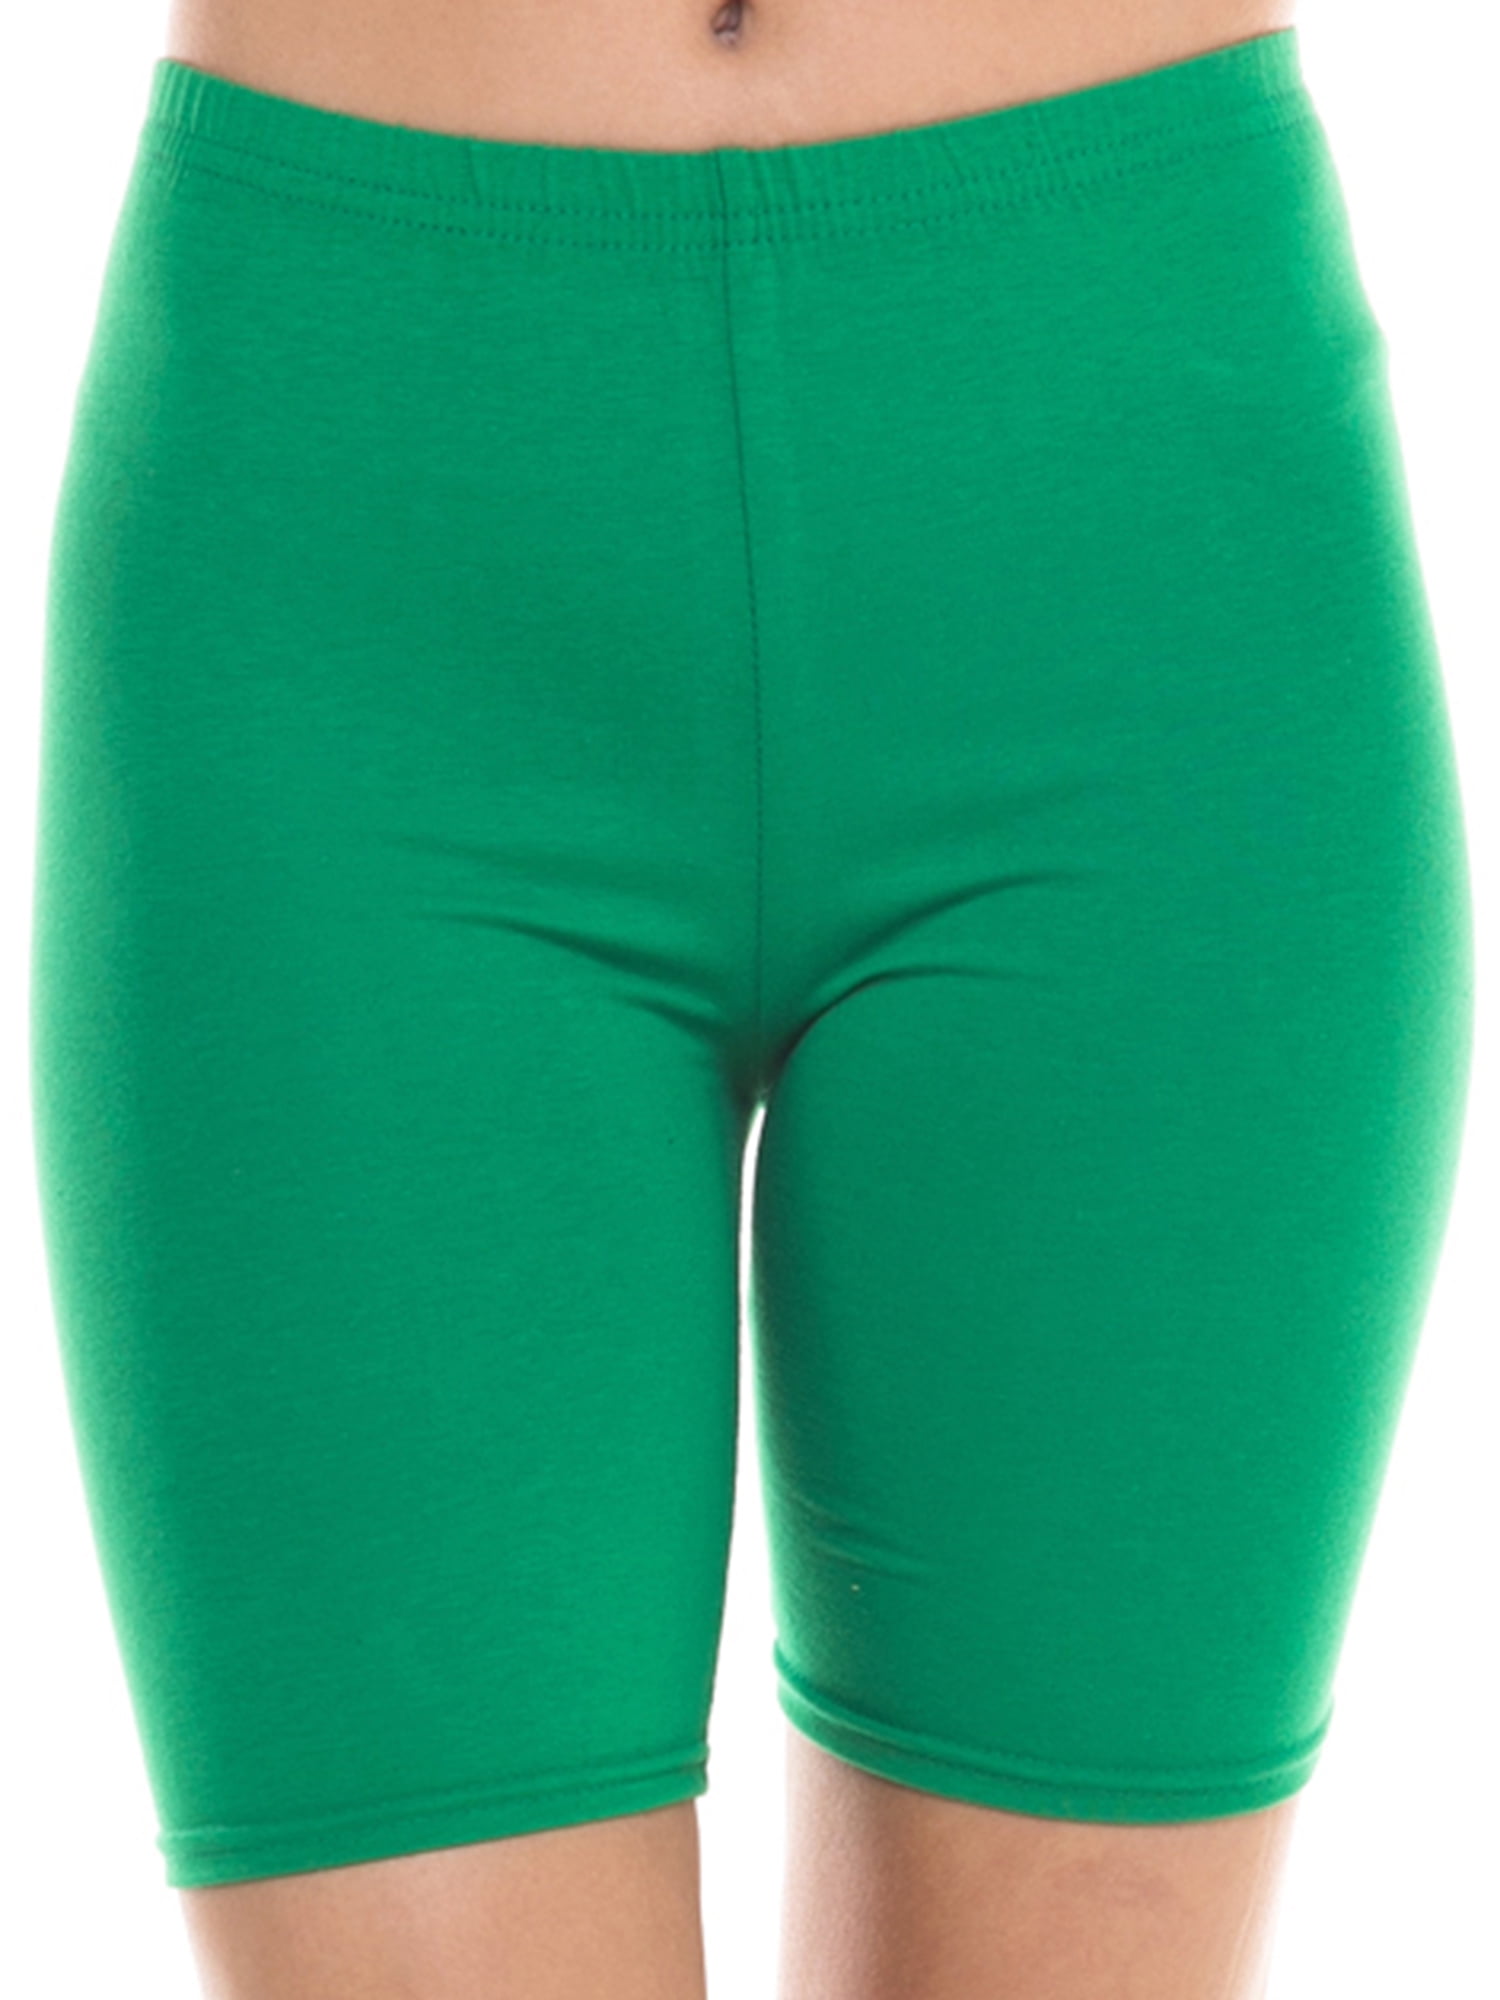 Ola Mari's Junior Size Solid Plain Cotton Biker Shorts - Walmart.com